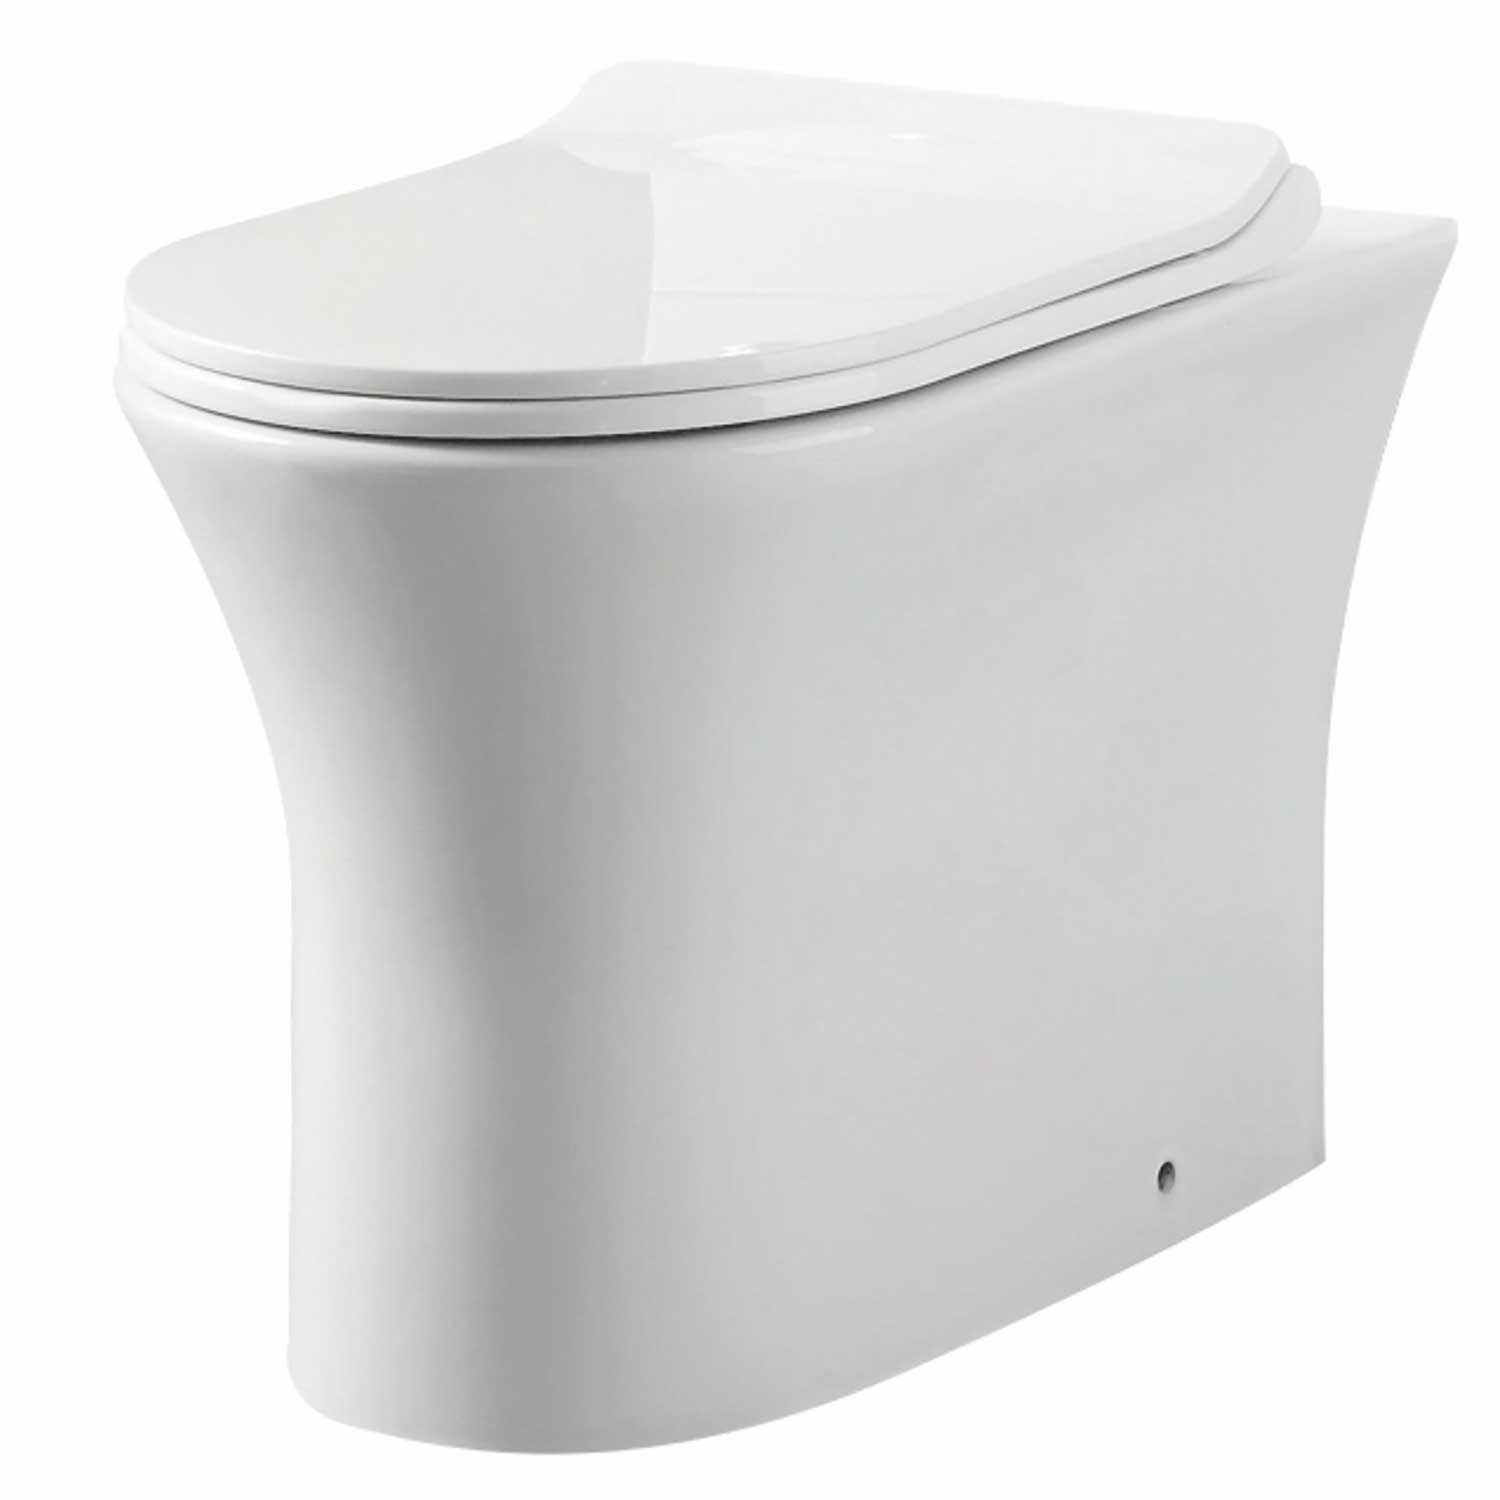 https://www.heatandplumb.com/images/products/o/orbit-viva-toilet-viva006.jpg